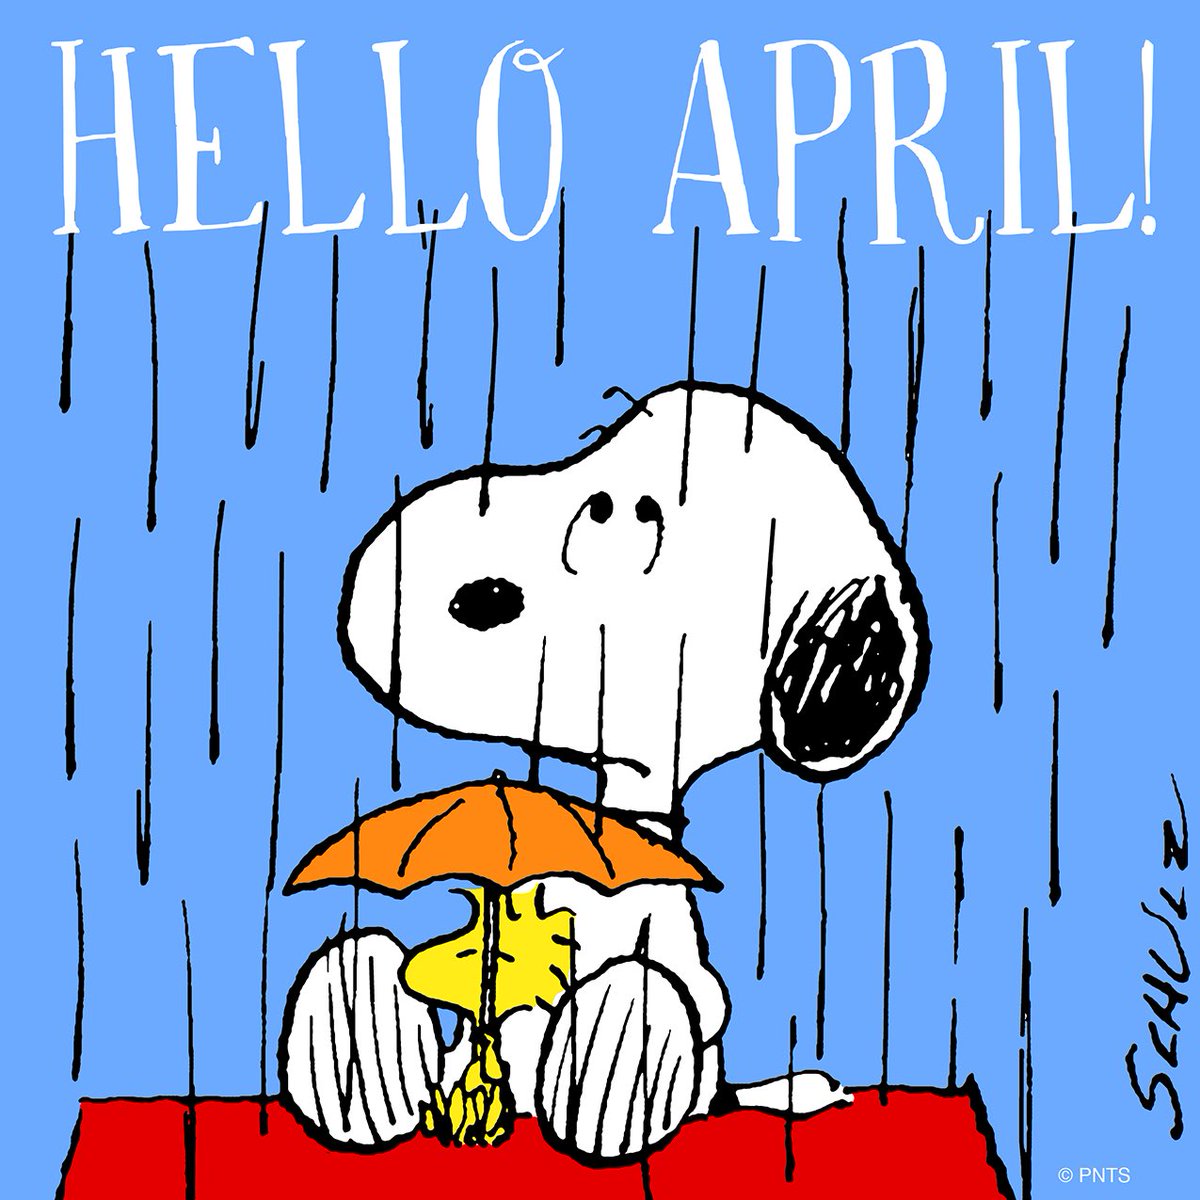 PEANUTS on Twitter: "Hello April! https://t.co/mdiyk9oCR3" / Twitter